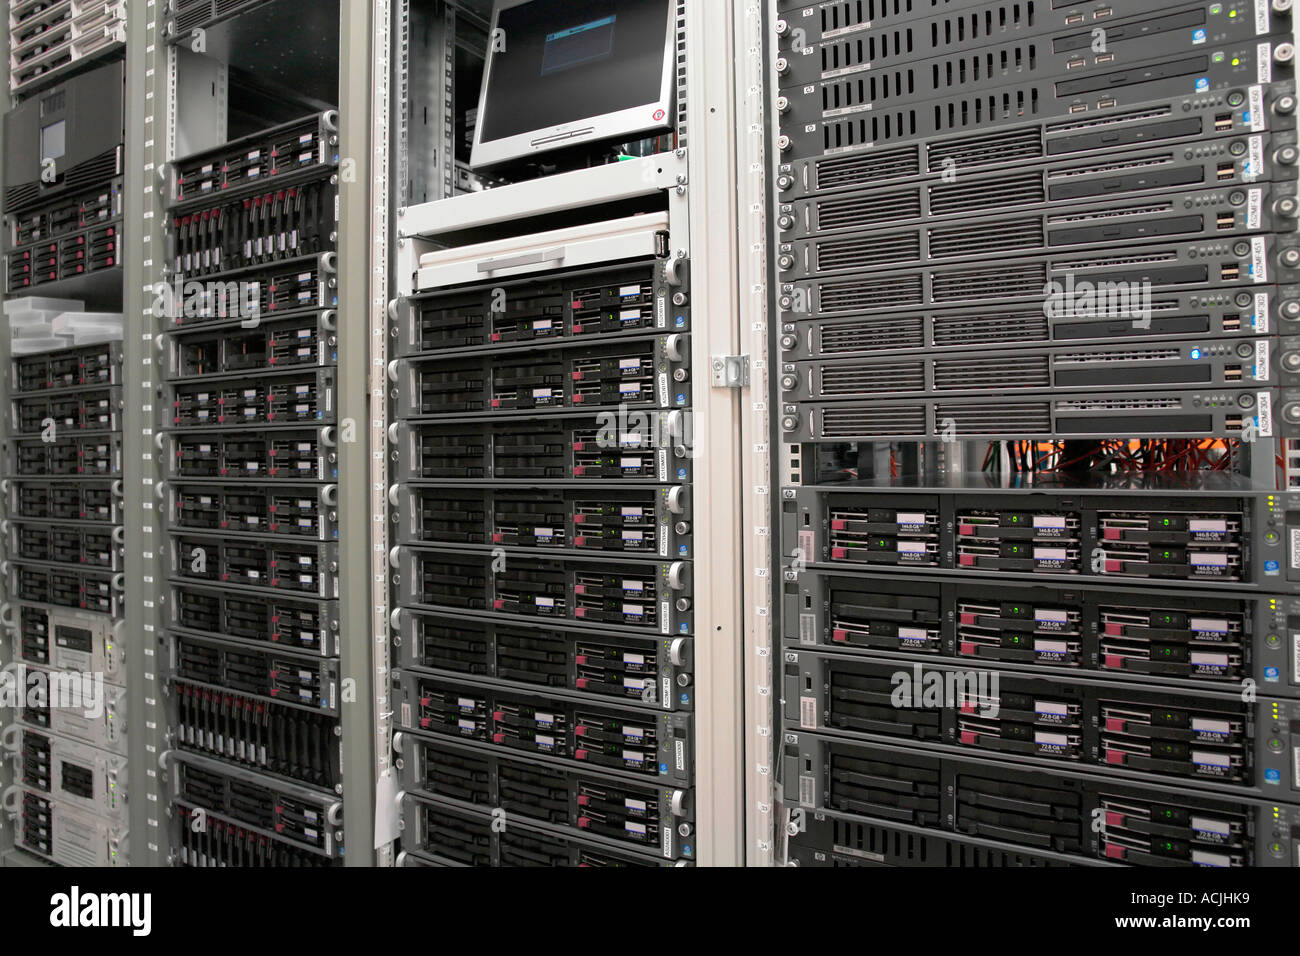 Hp proliant rack mounted servers fotografías e imágenes de alta resolución  - Alamy